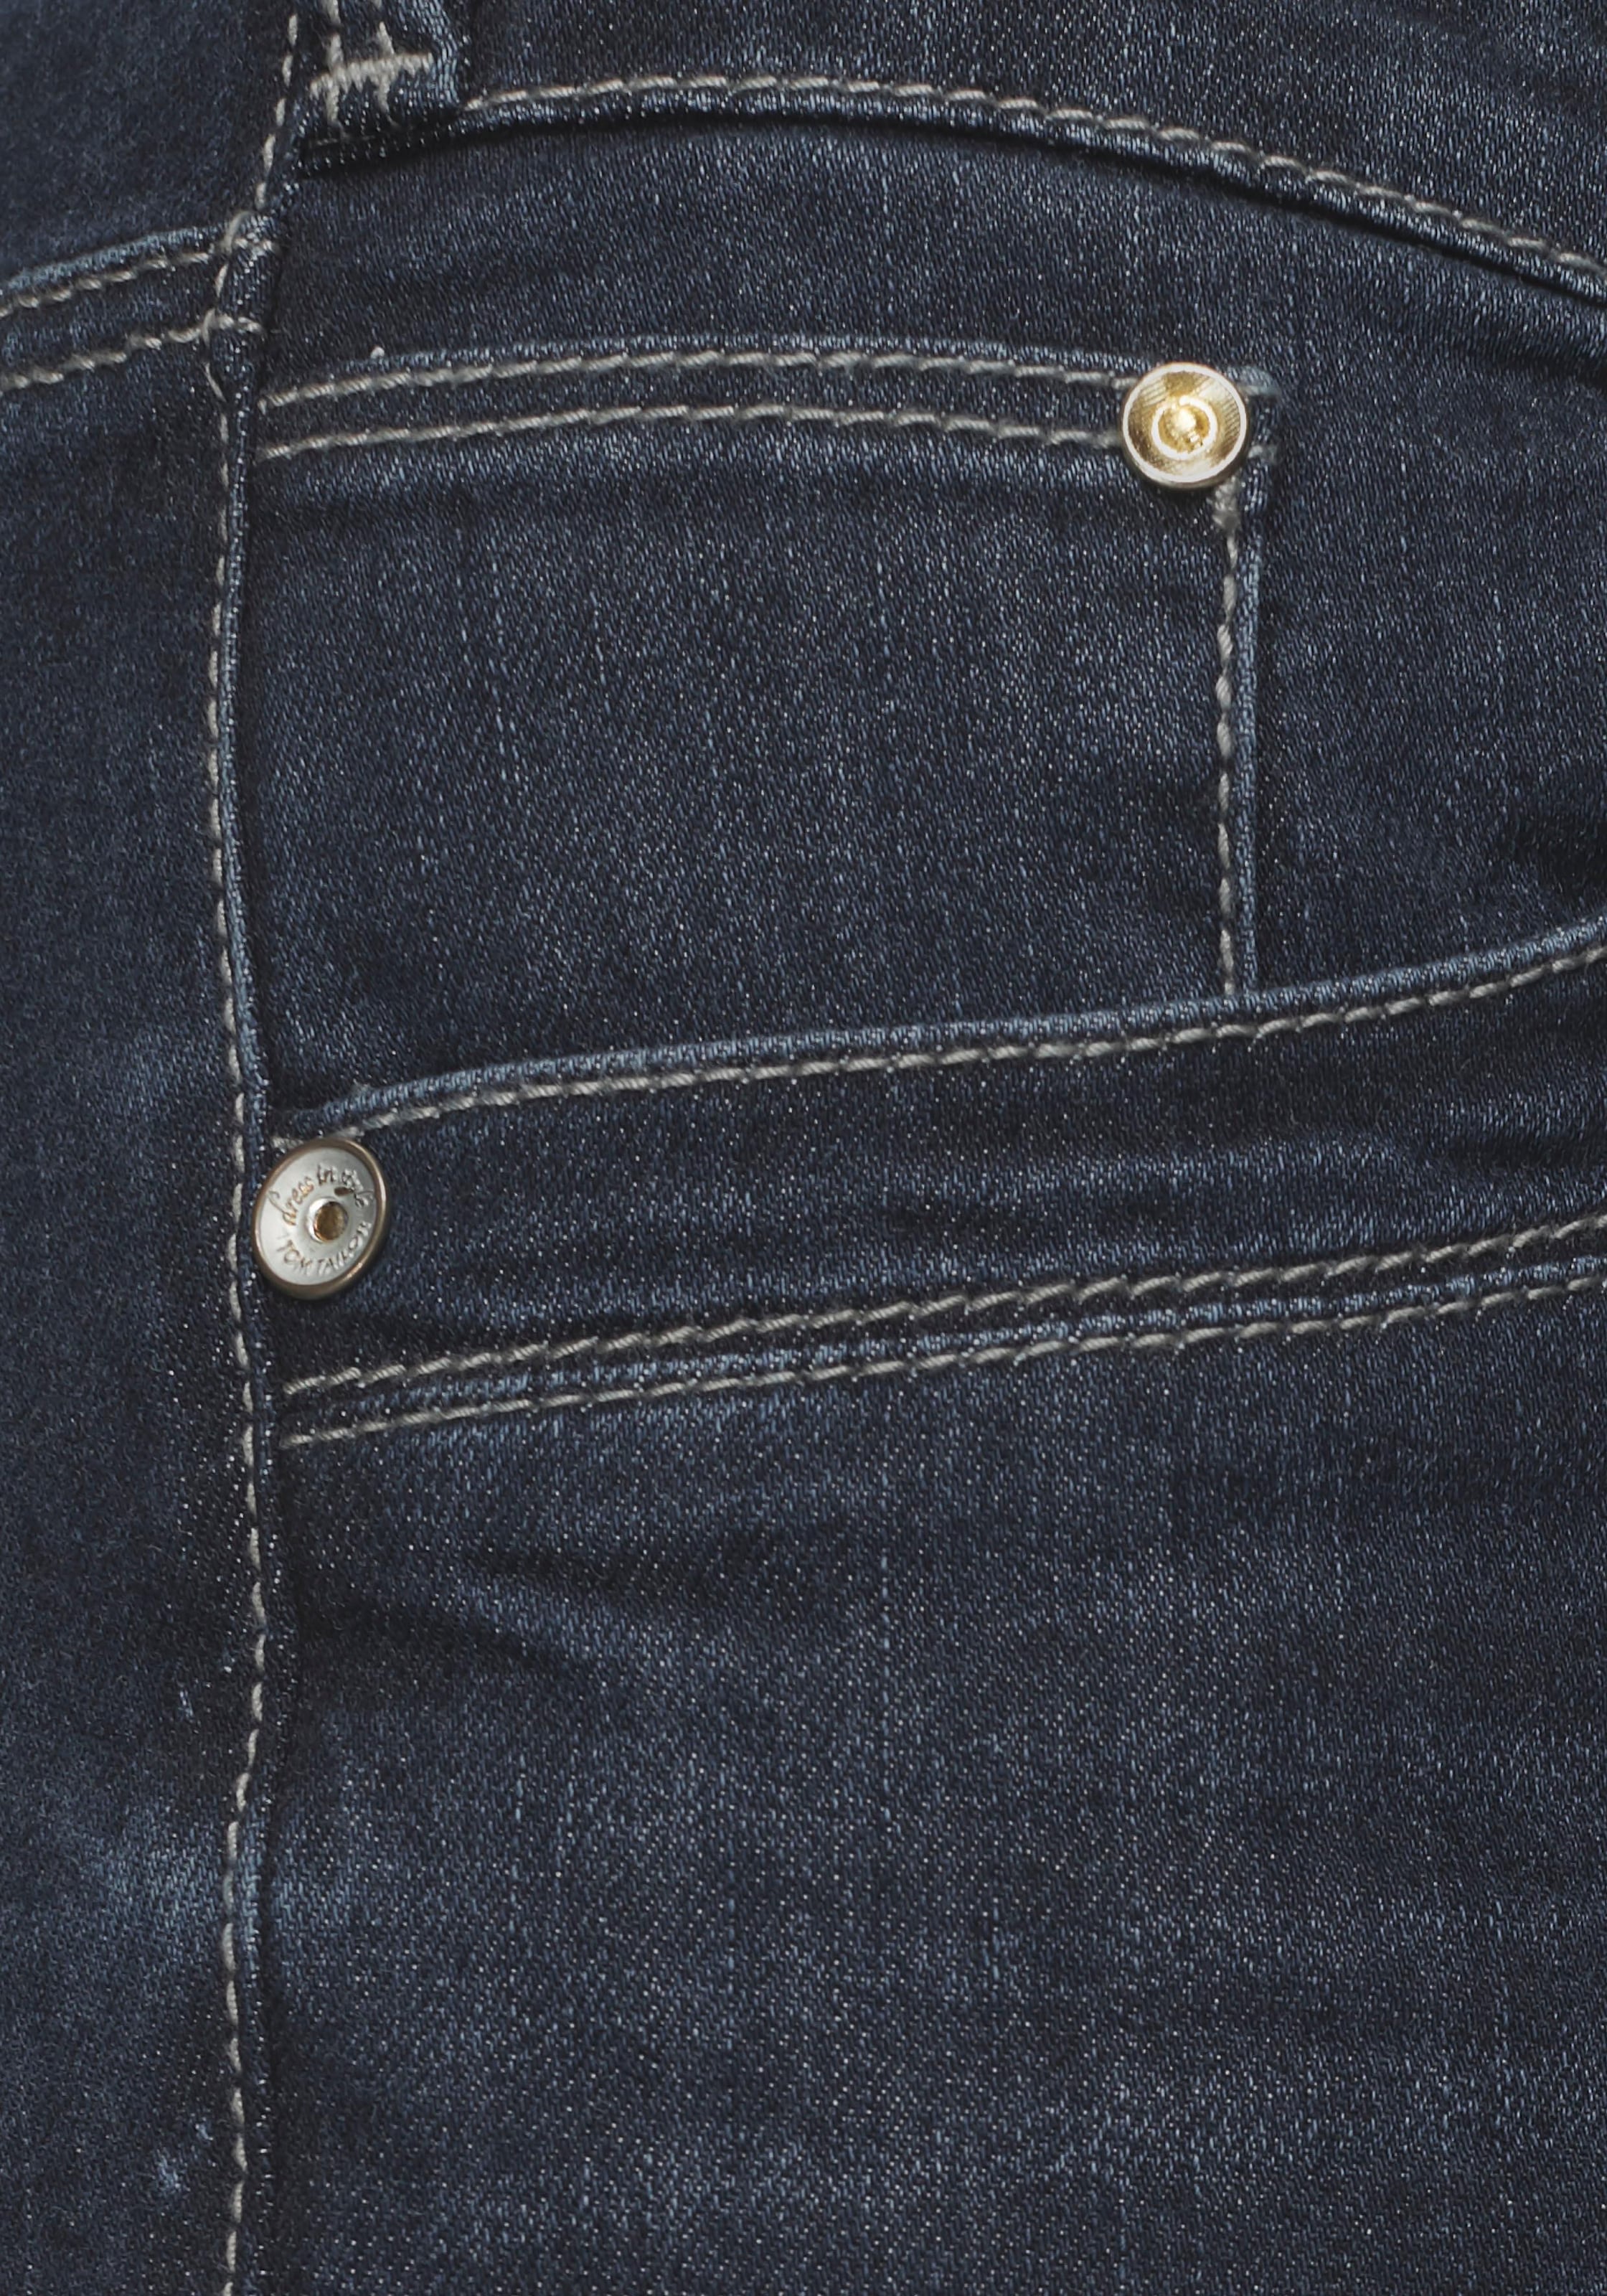 TOM TAILOR Gerade Jeans »Alexa Straight«, mit Kontrastnähten